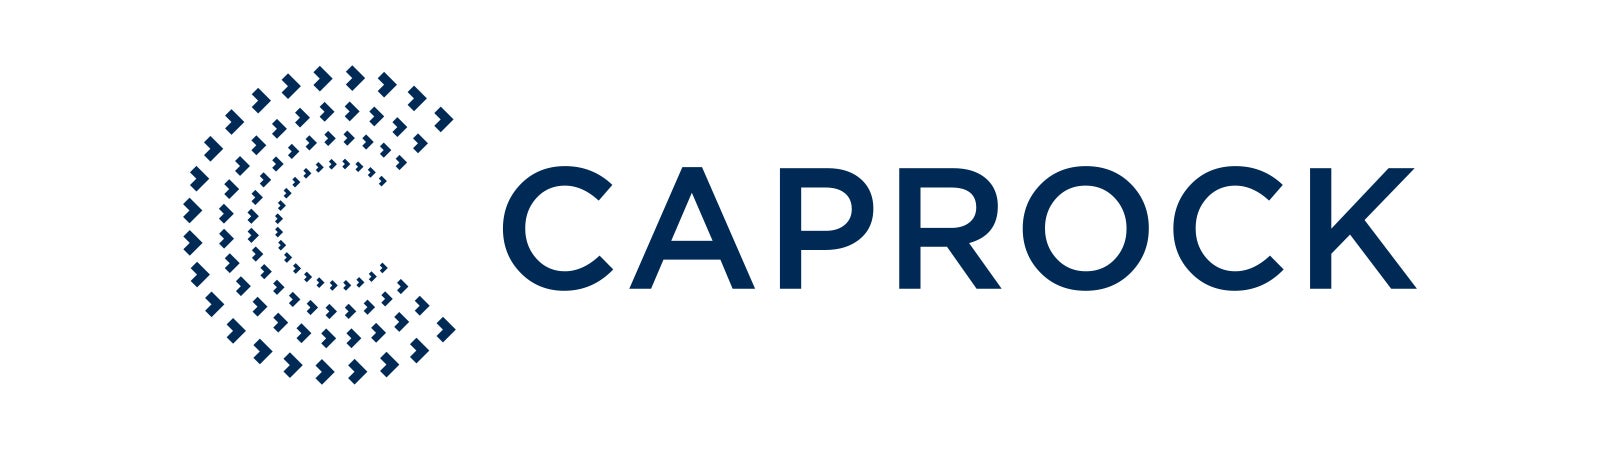 Caprock logo